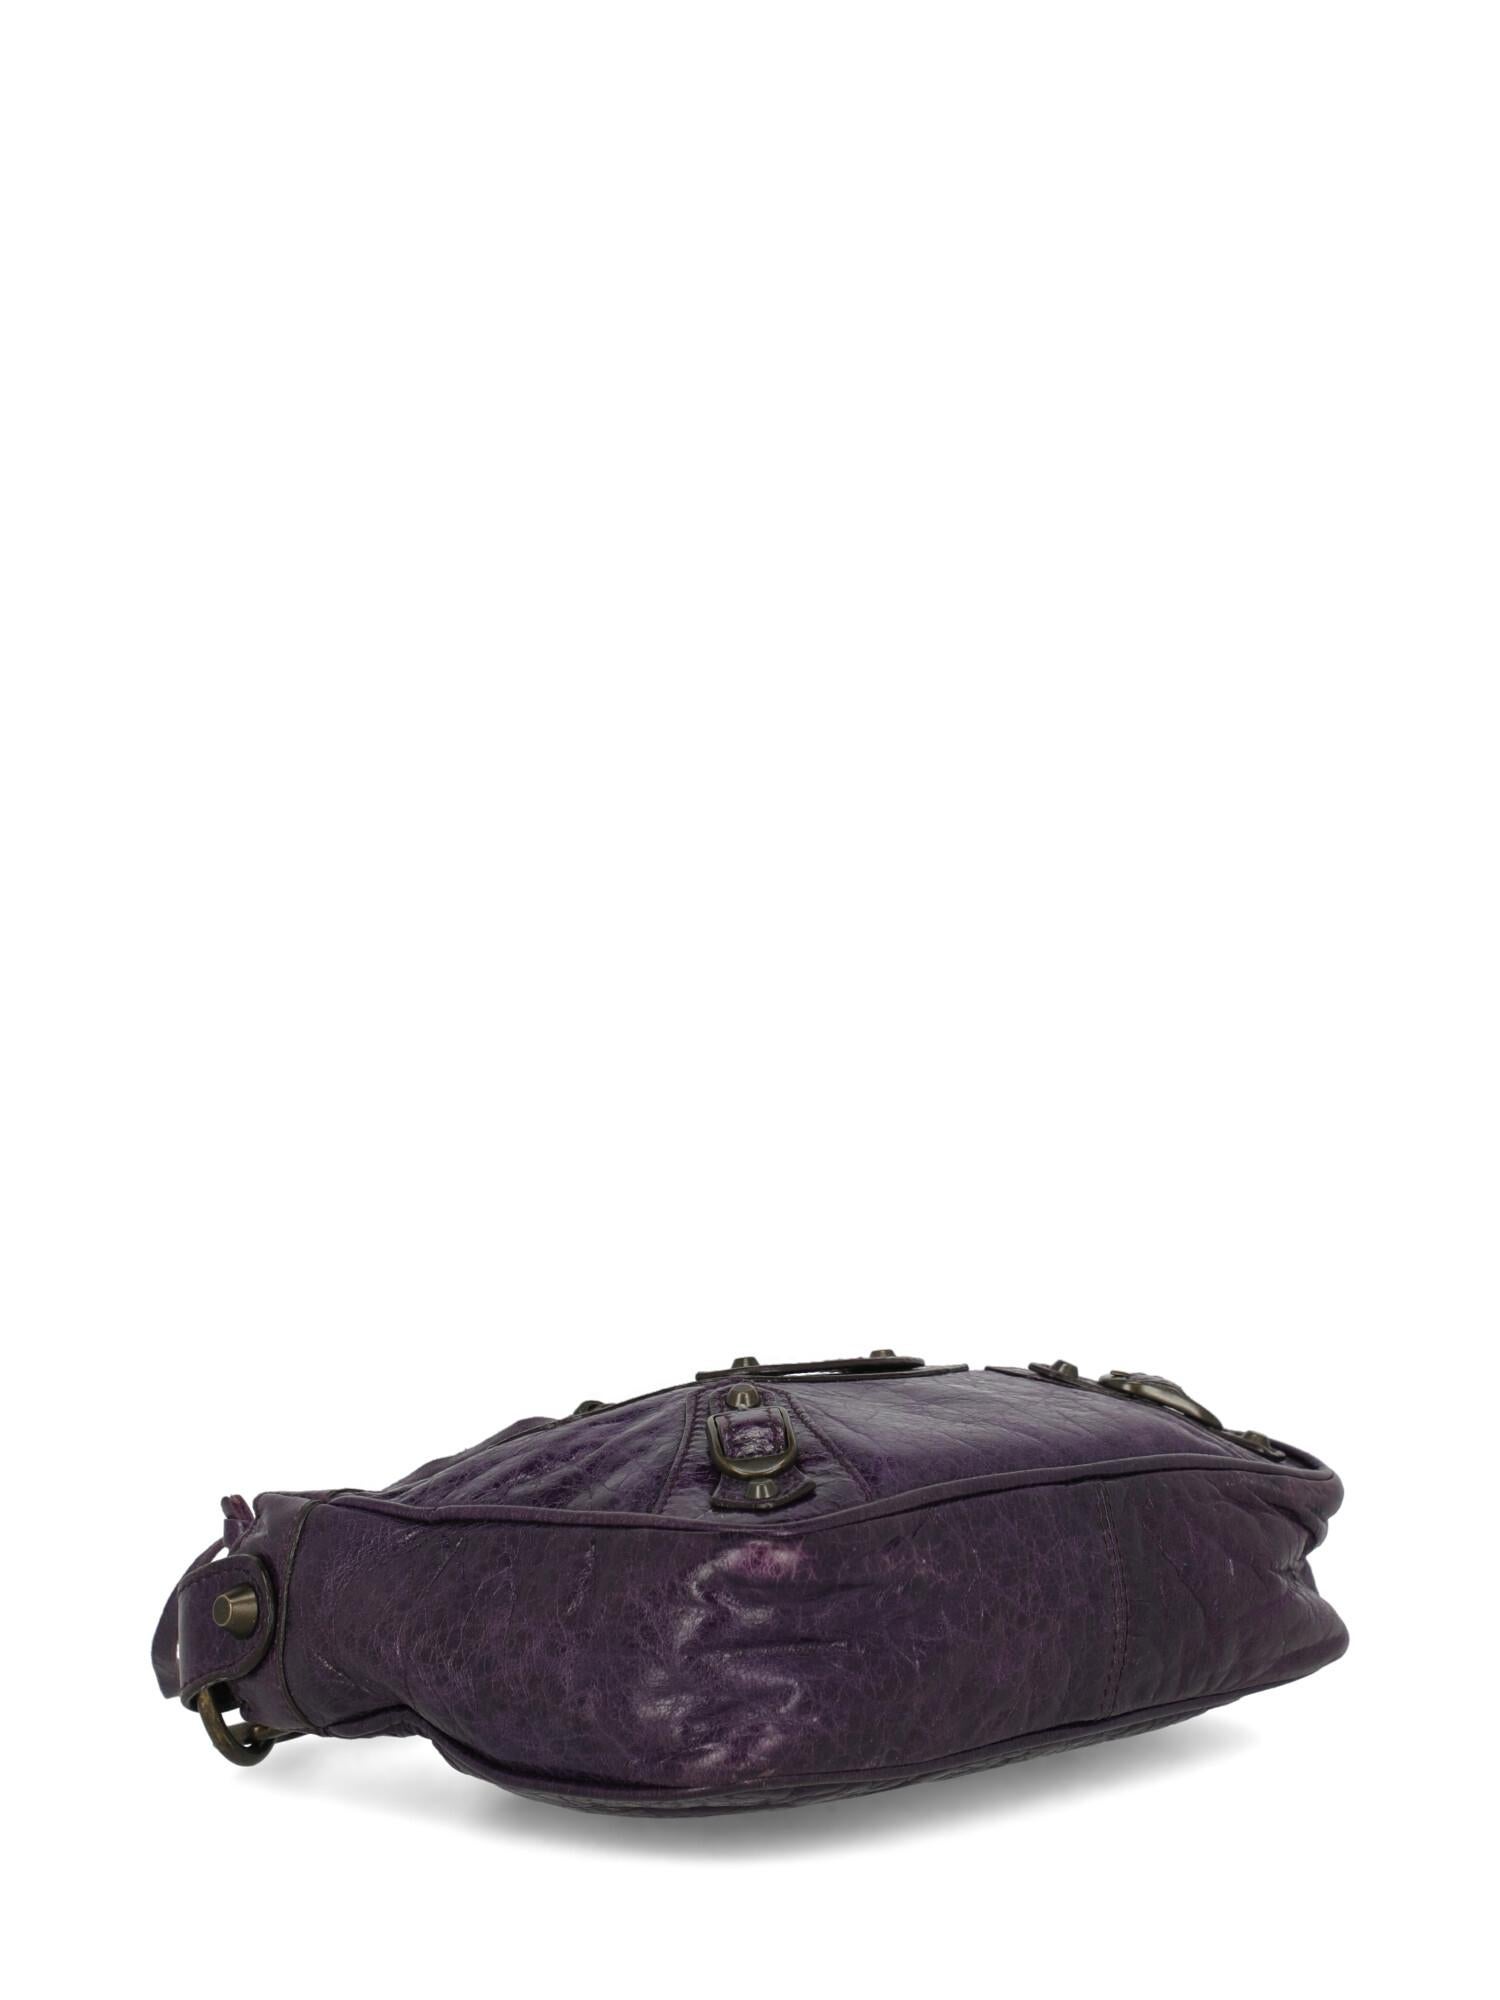 Women's Balenciaga Woman Handbag Purple Leather For Sale